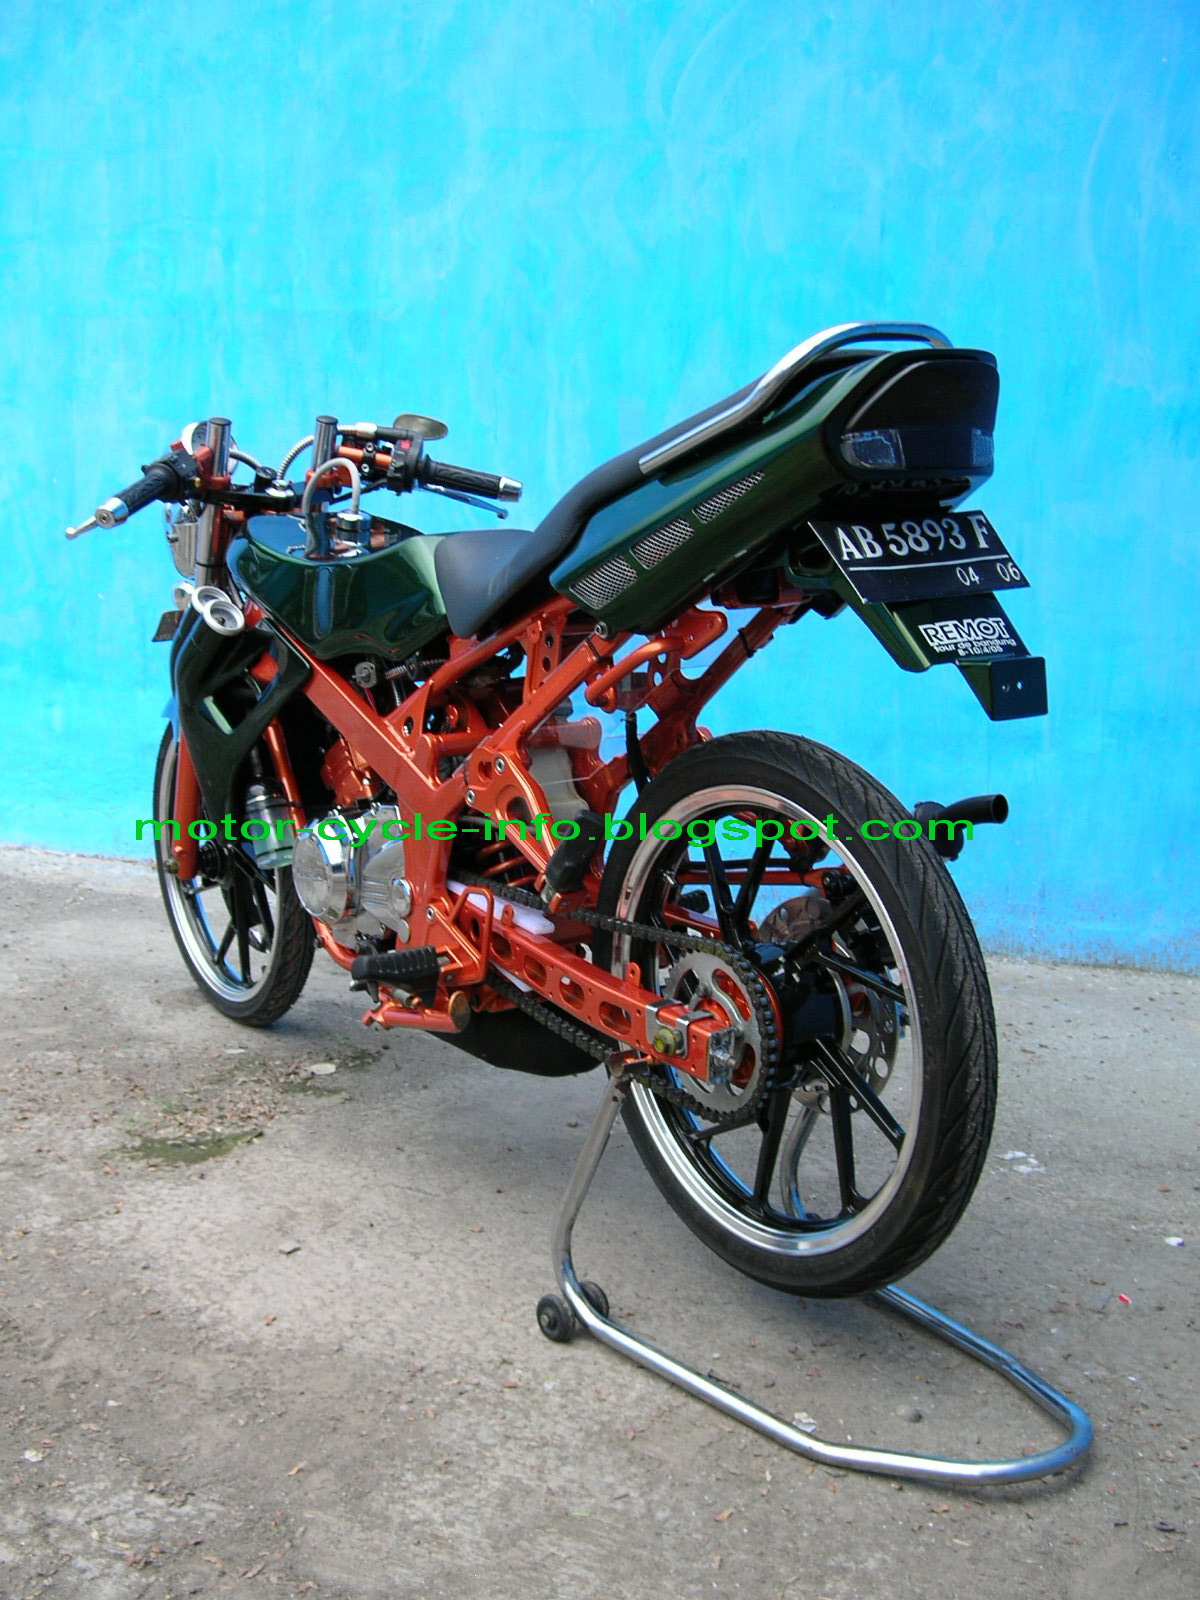 Gambar Kawasaki Ninja Modif Extreme Jogja Motorcycle Case